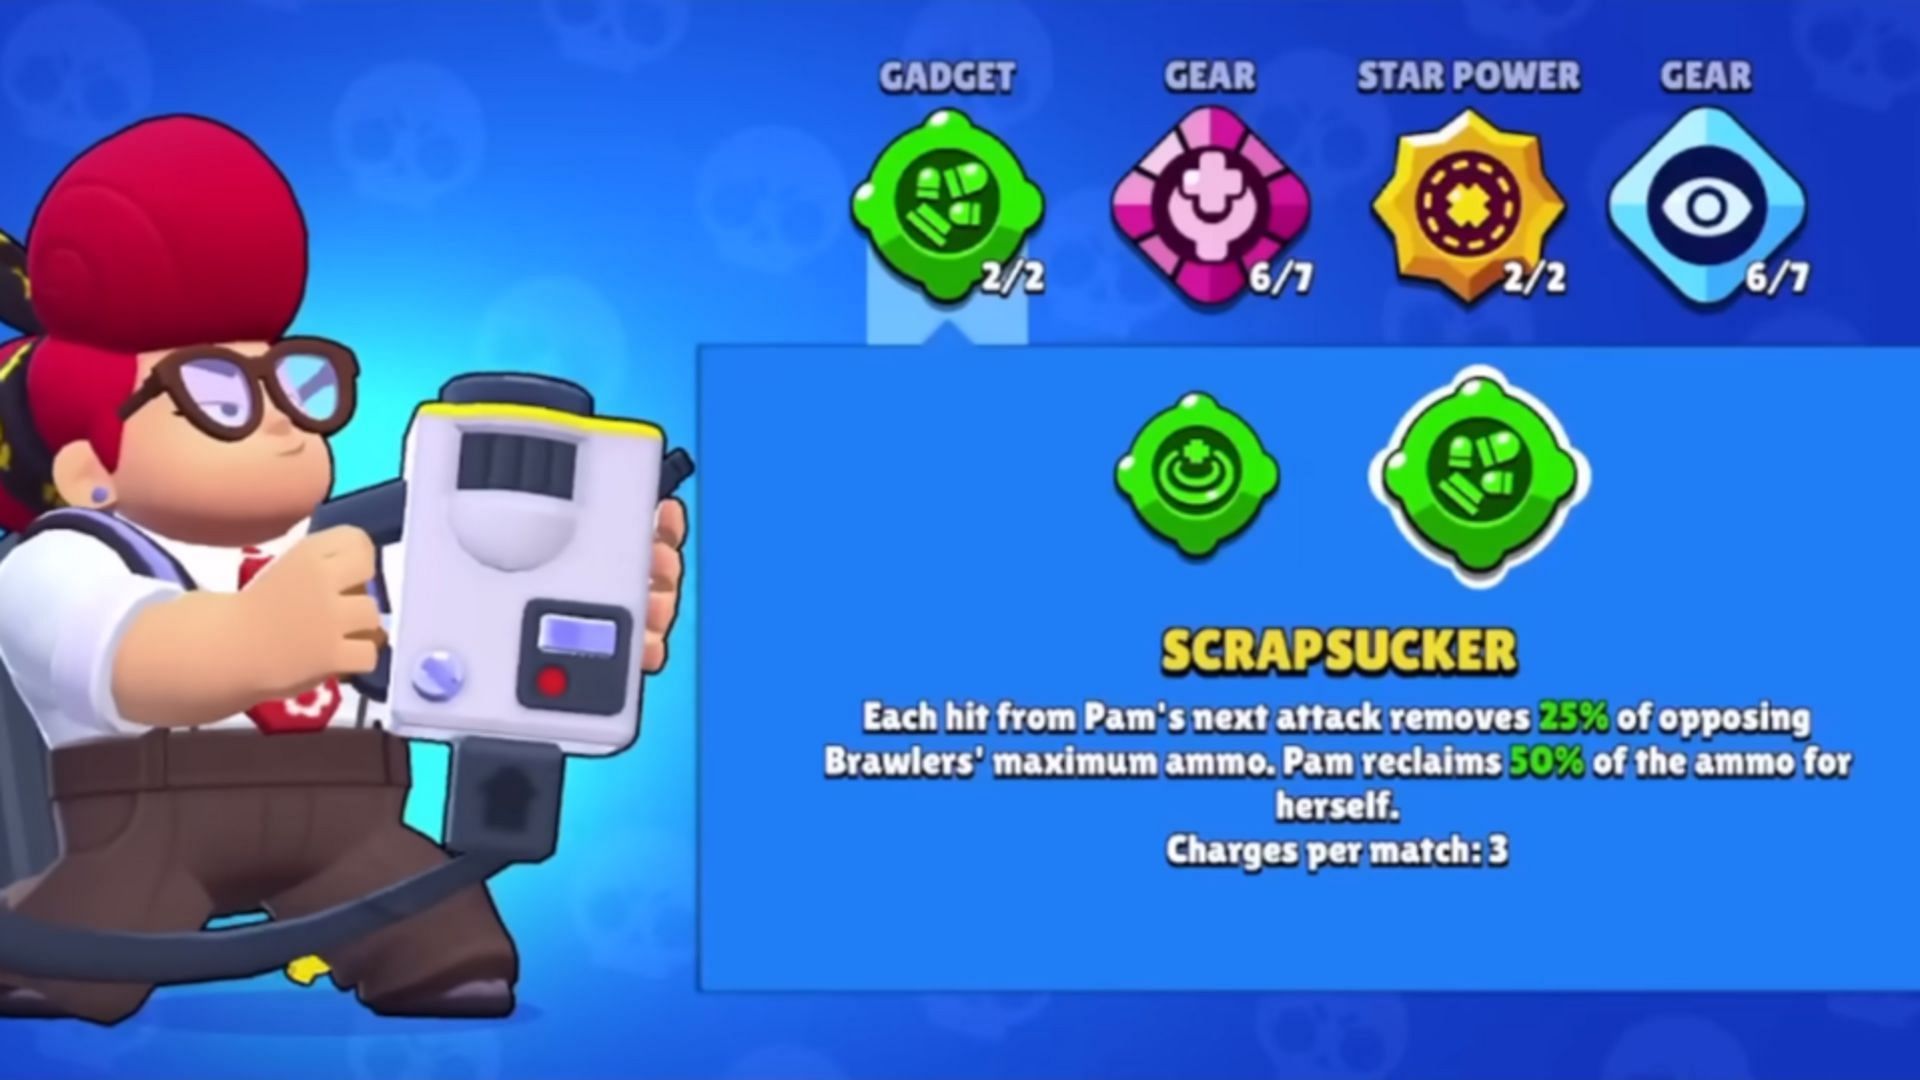 Scrapsucker Gadget (Image via Supercell)